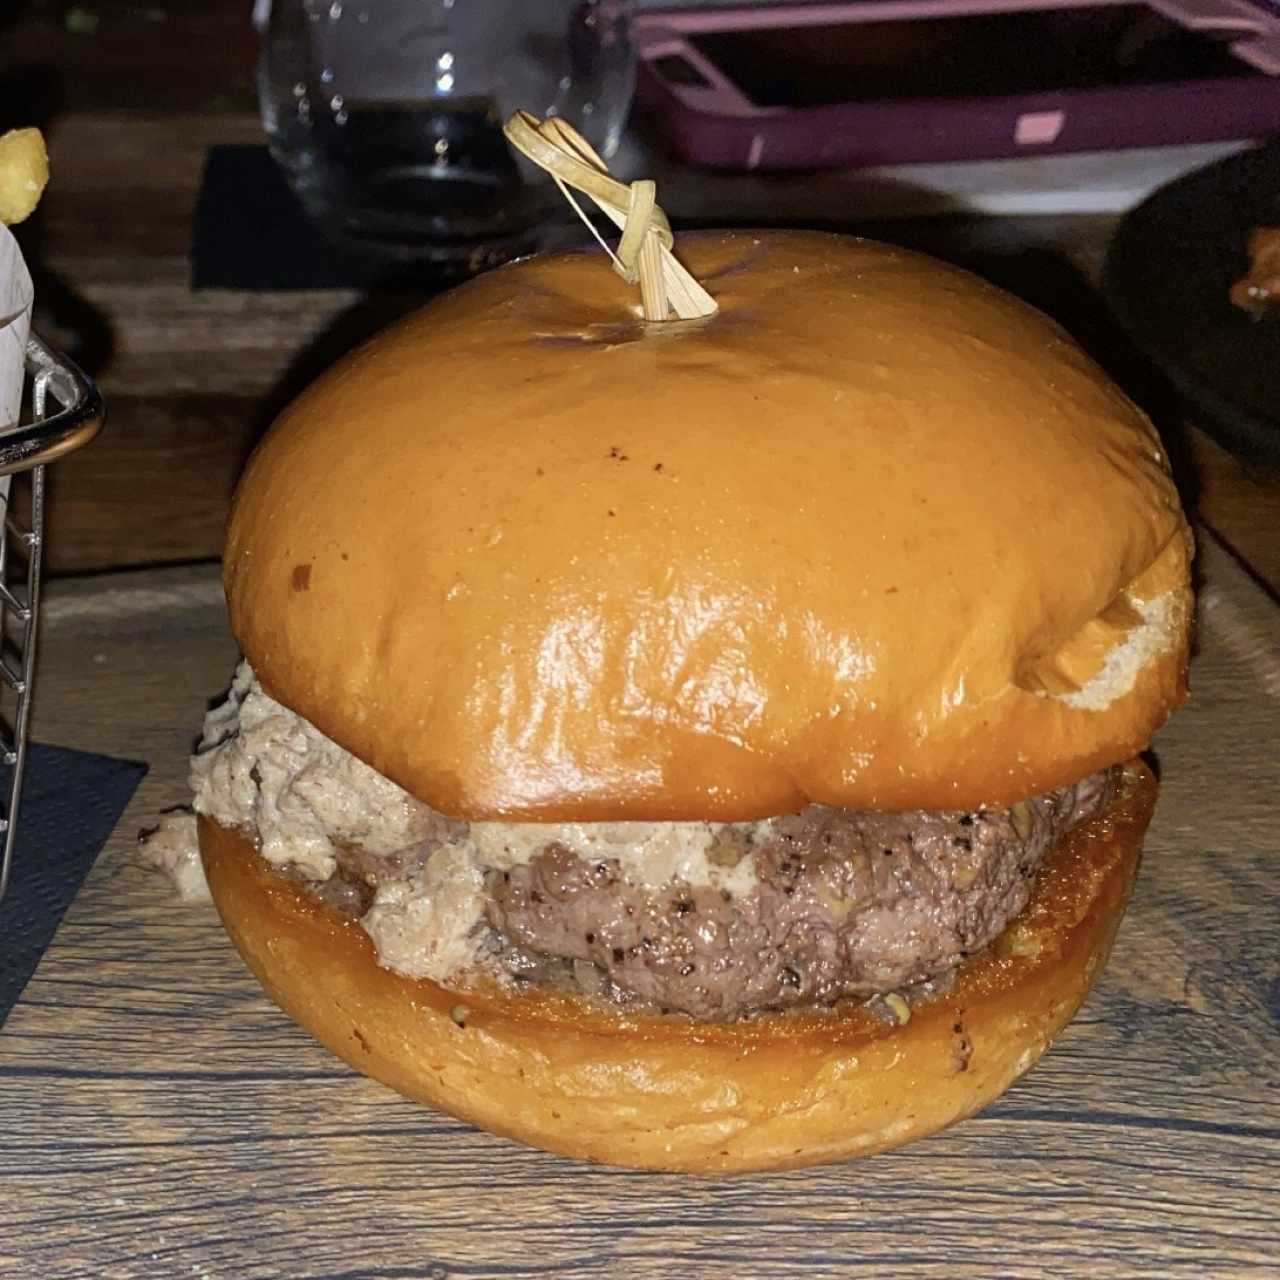 Truffle Burger